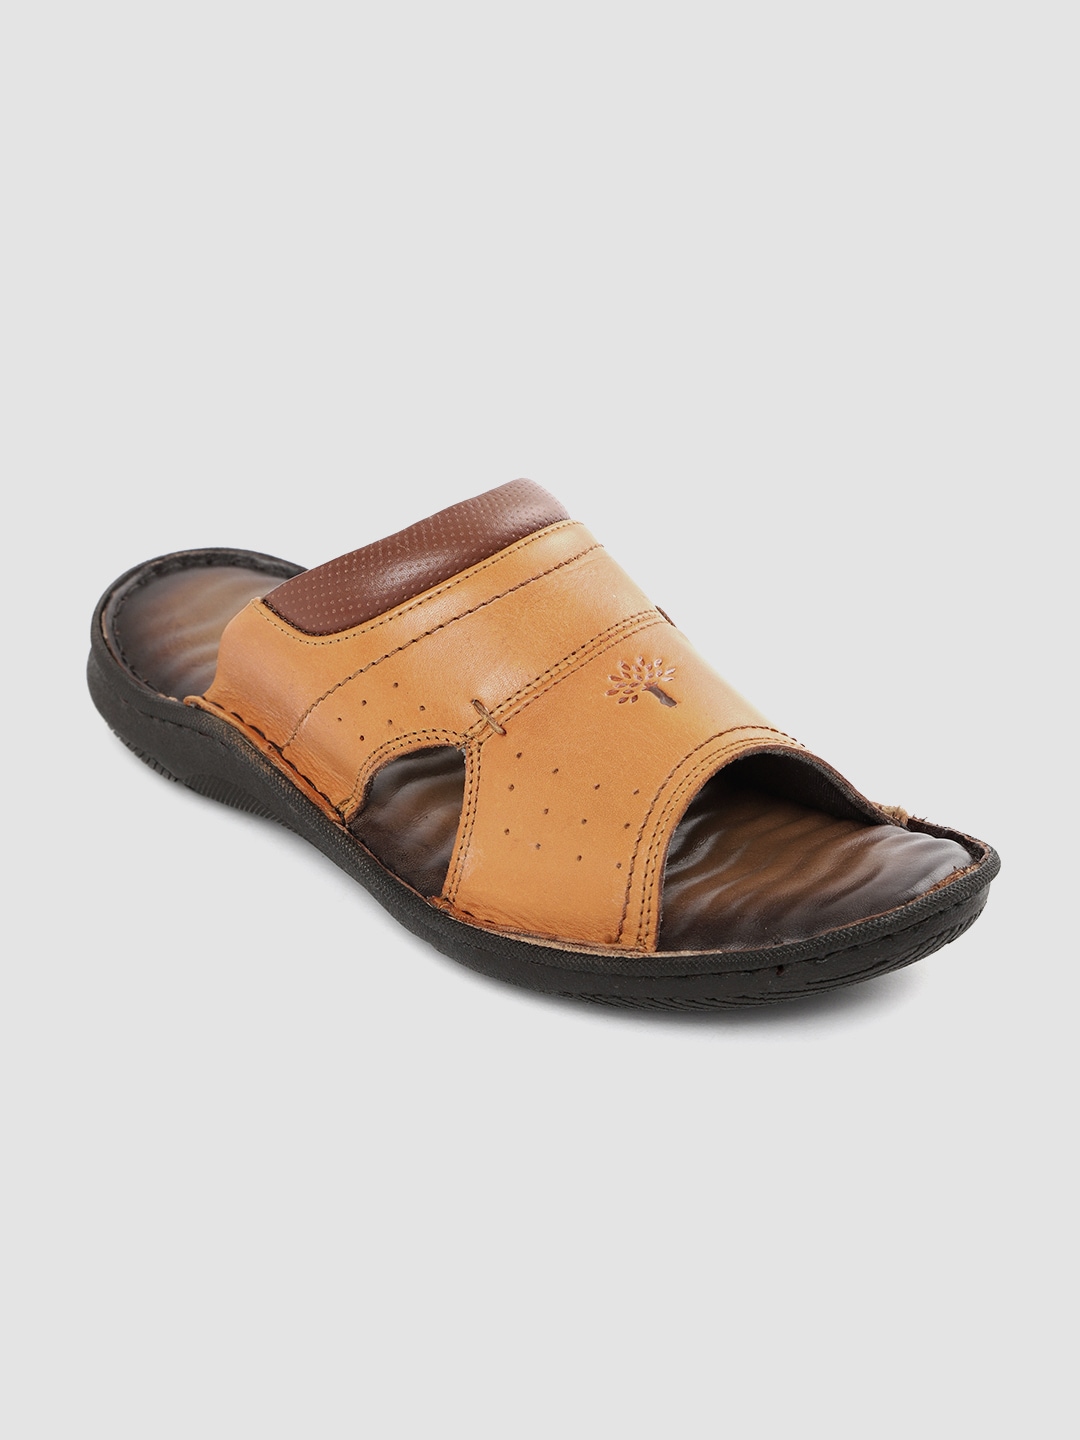 Woodland Leather Sandal For Men - 3768120 Camel-sgquangbinhtourist.com.vn